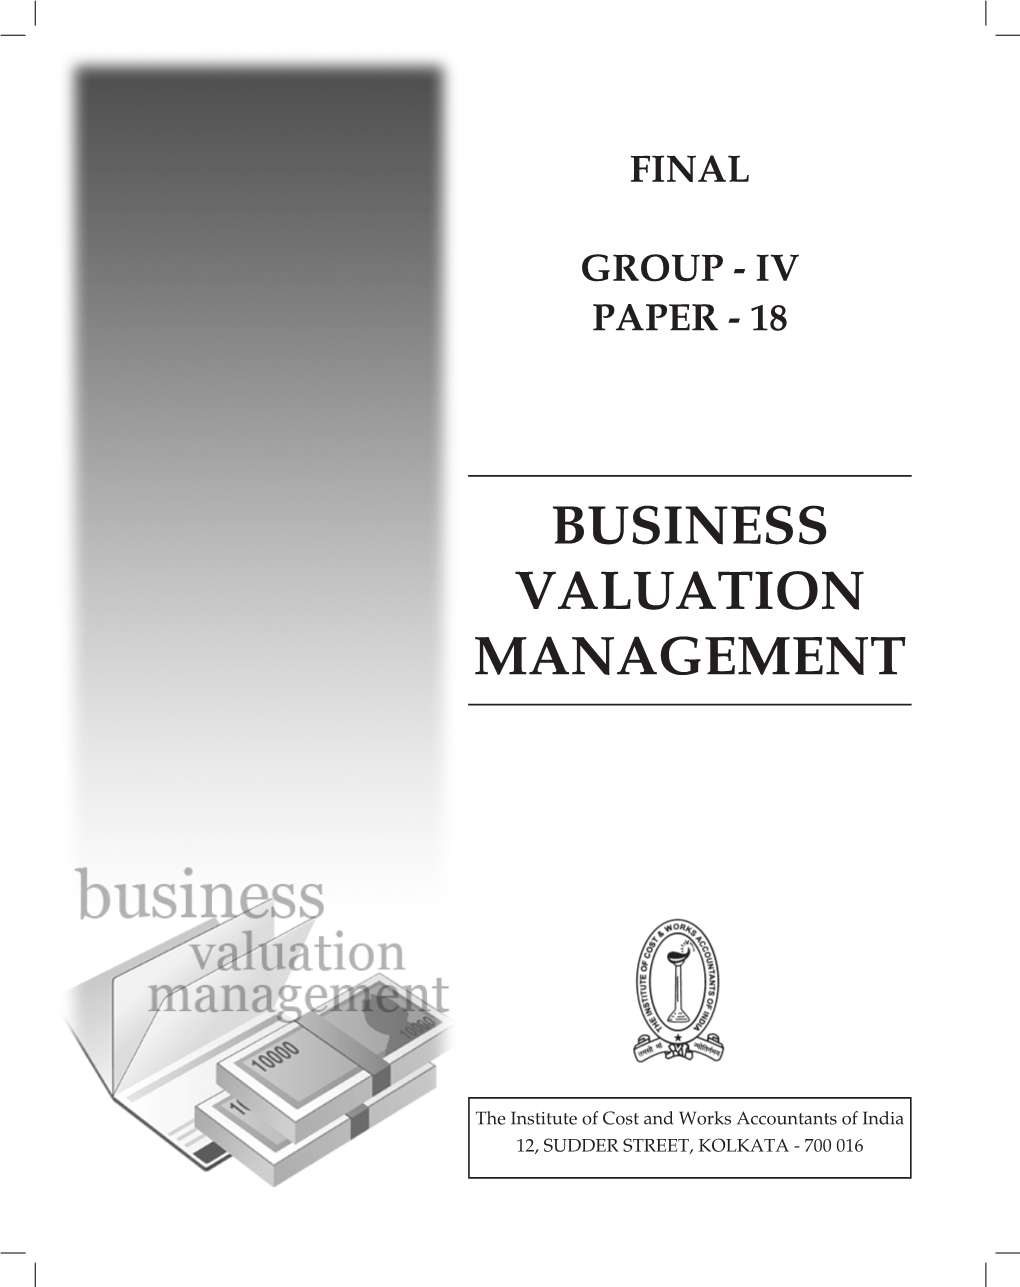 Business Valuation Management